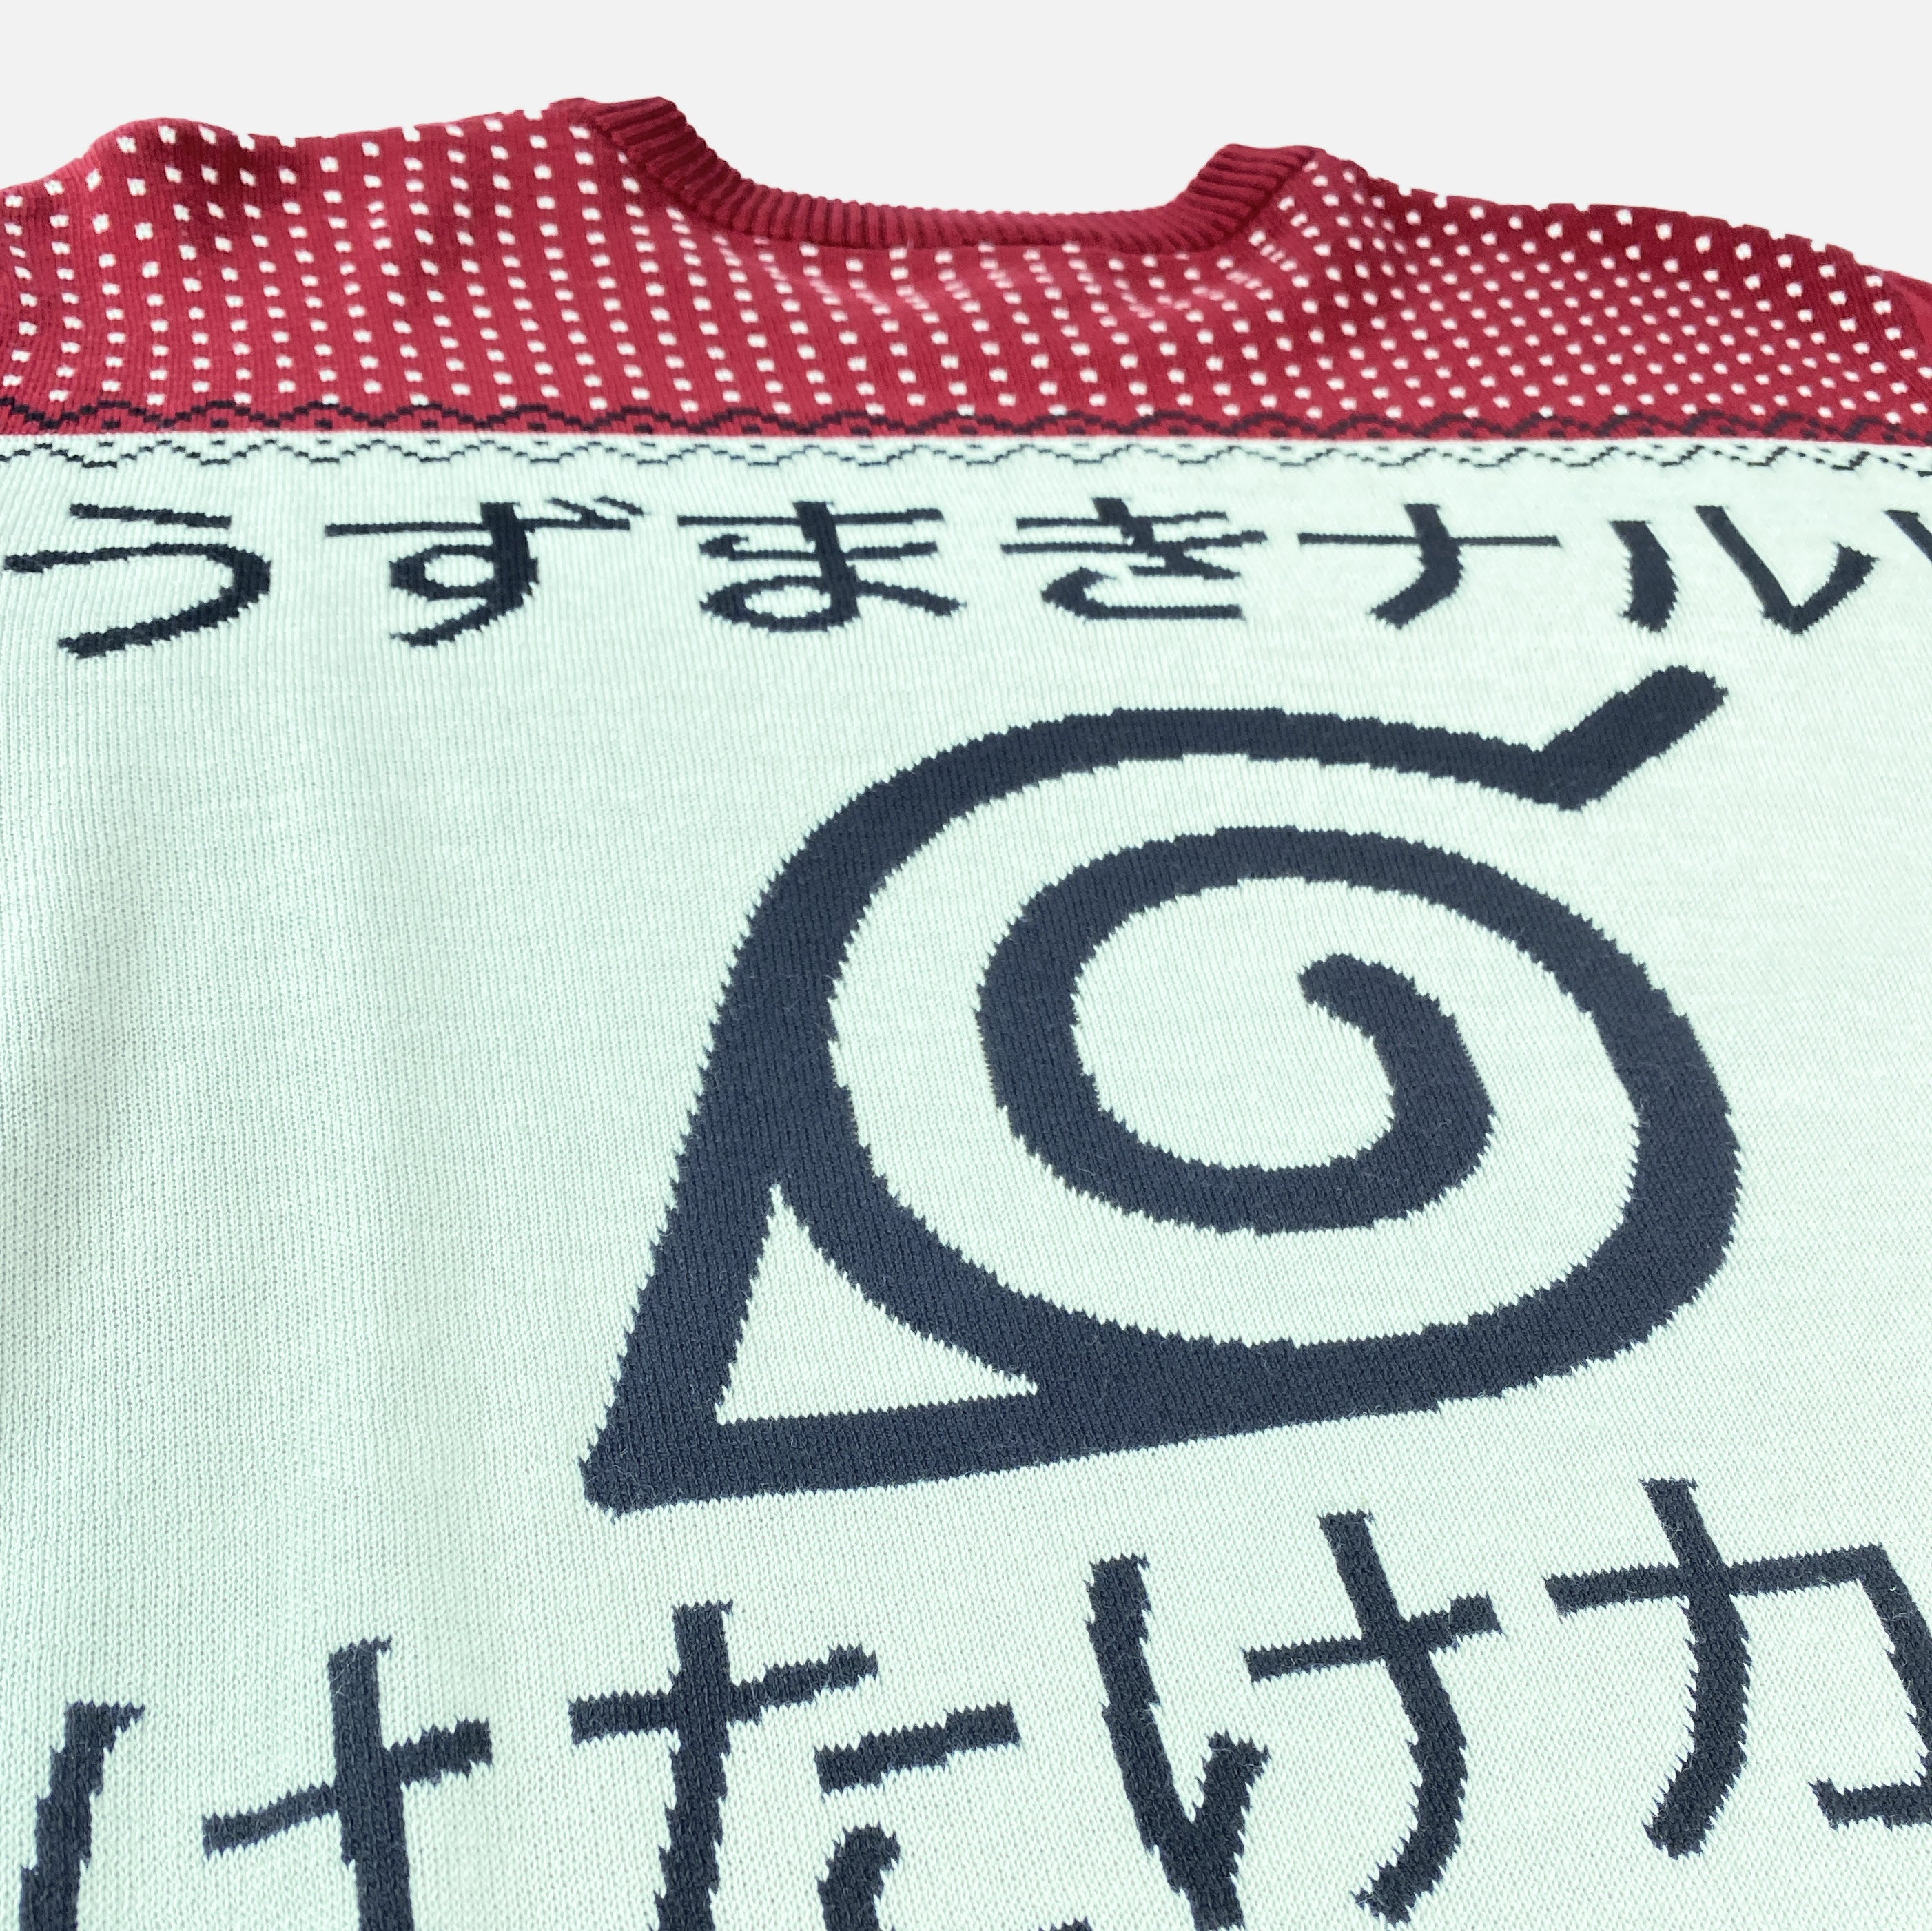 Naruto Shippuden - Naruto Kakashi Chibi Sweater - Crunchyroll Exclusive! image count 3